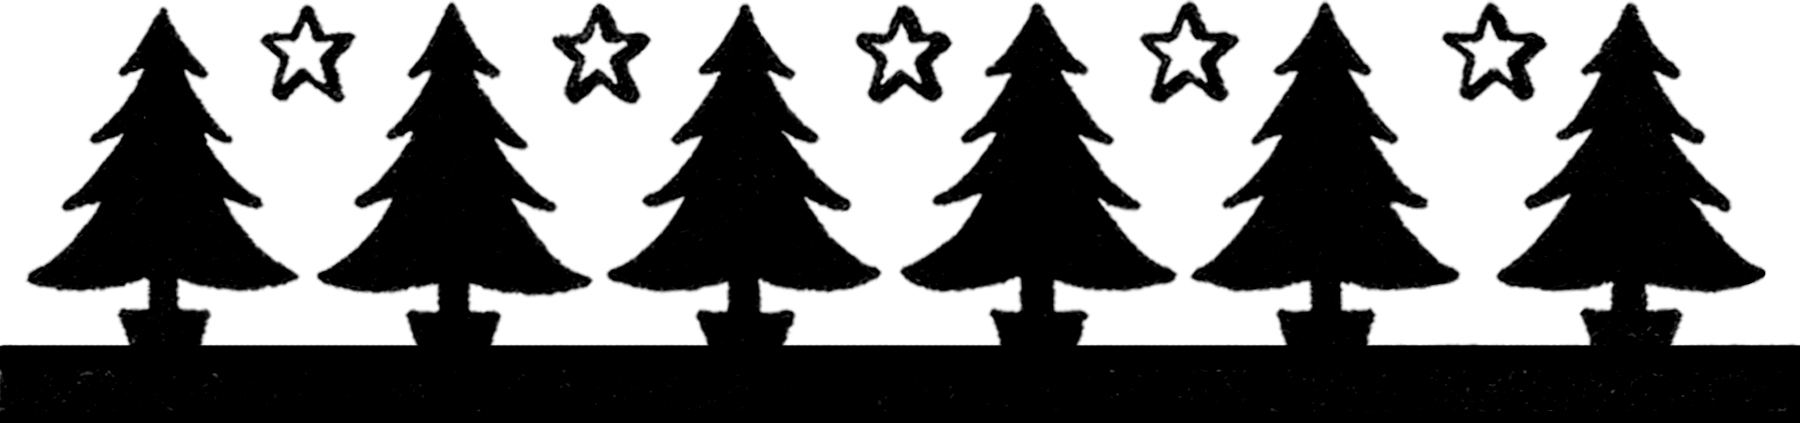 christmas tree silhouette clip art free - photo #47